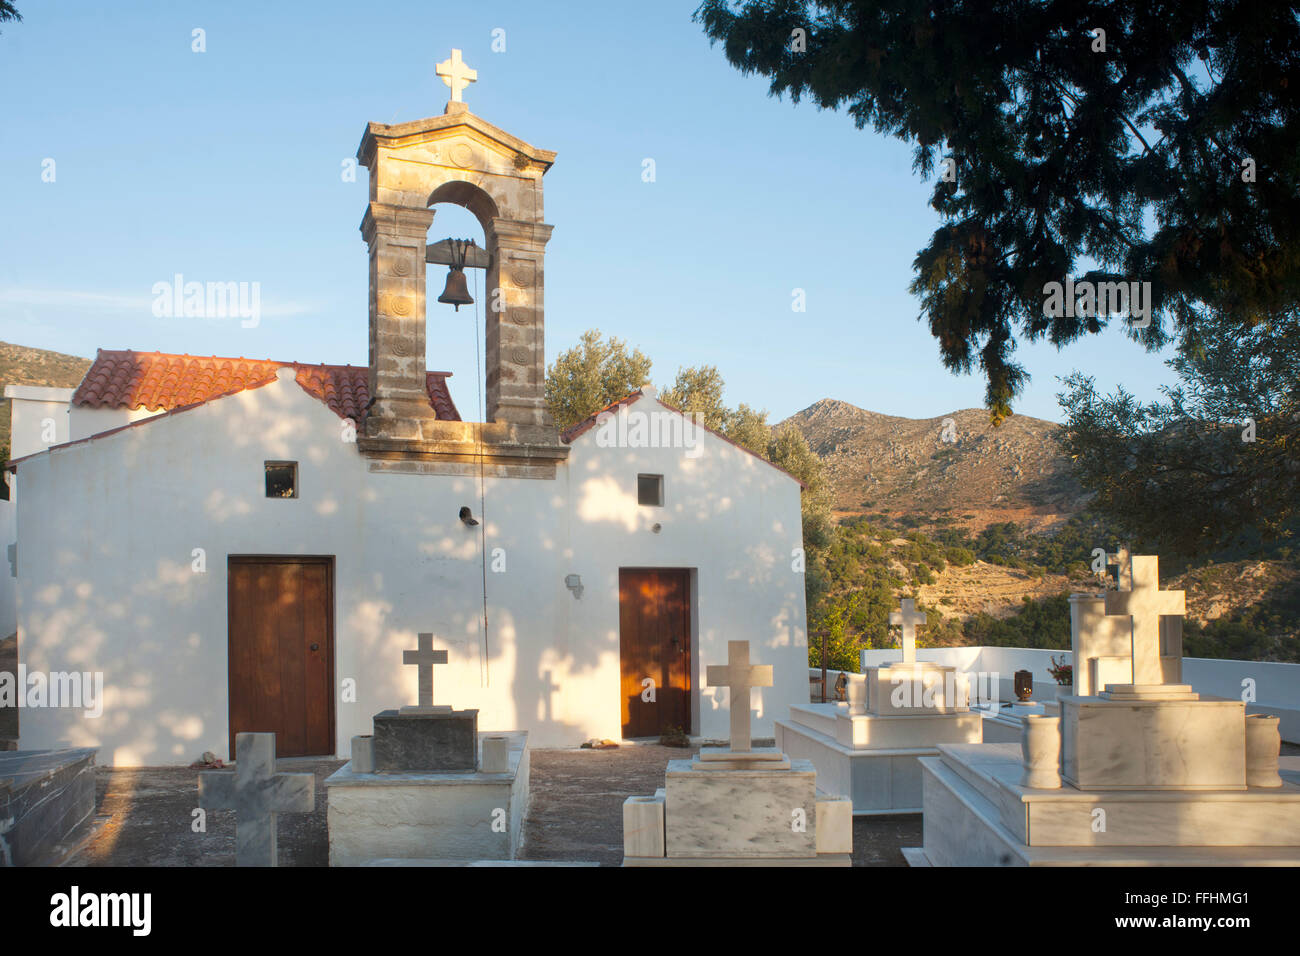 Griechenland, Kreta, Anidri bei Paleochora, Friedhofskirche Agios Georgios Stock Photo